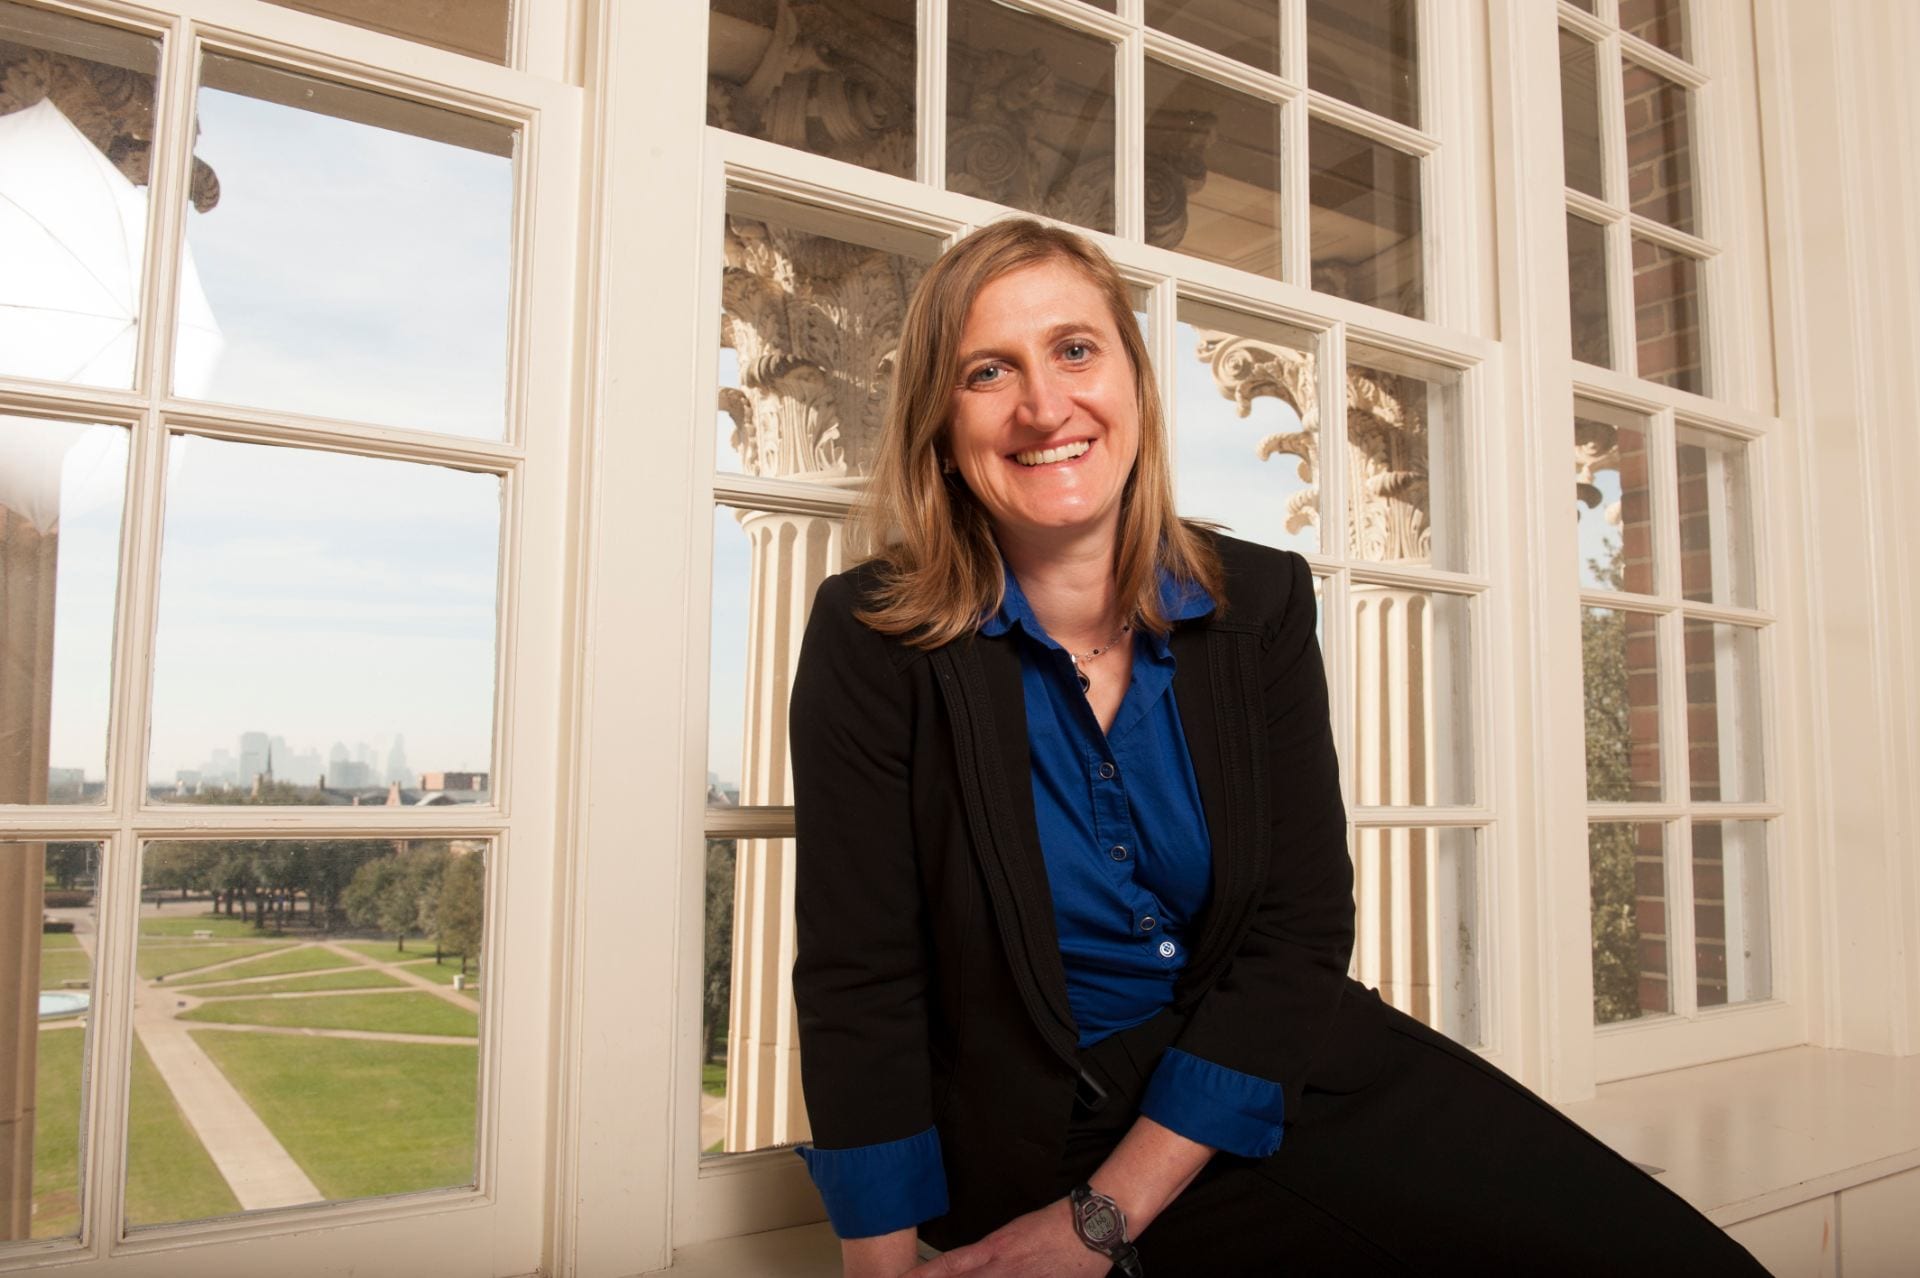 SMU physicist Jodi Cooley receives the 2019 Klopsteg Memorial Lecture Award